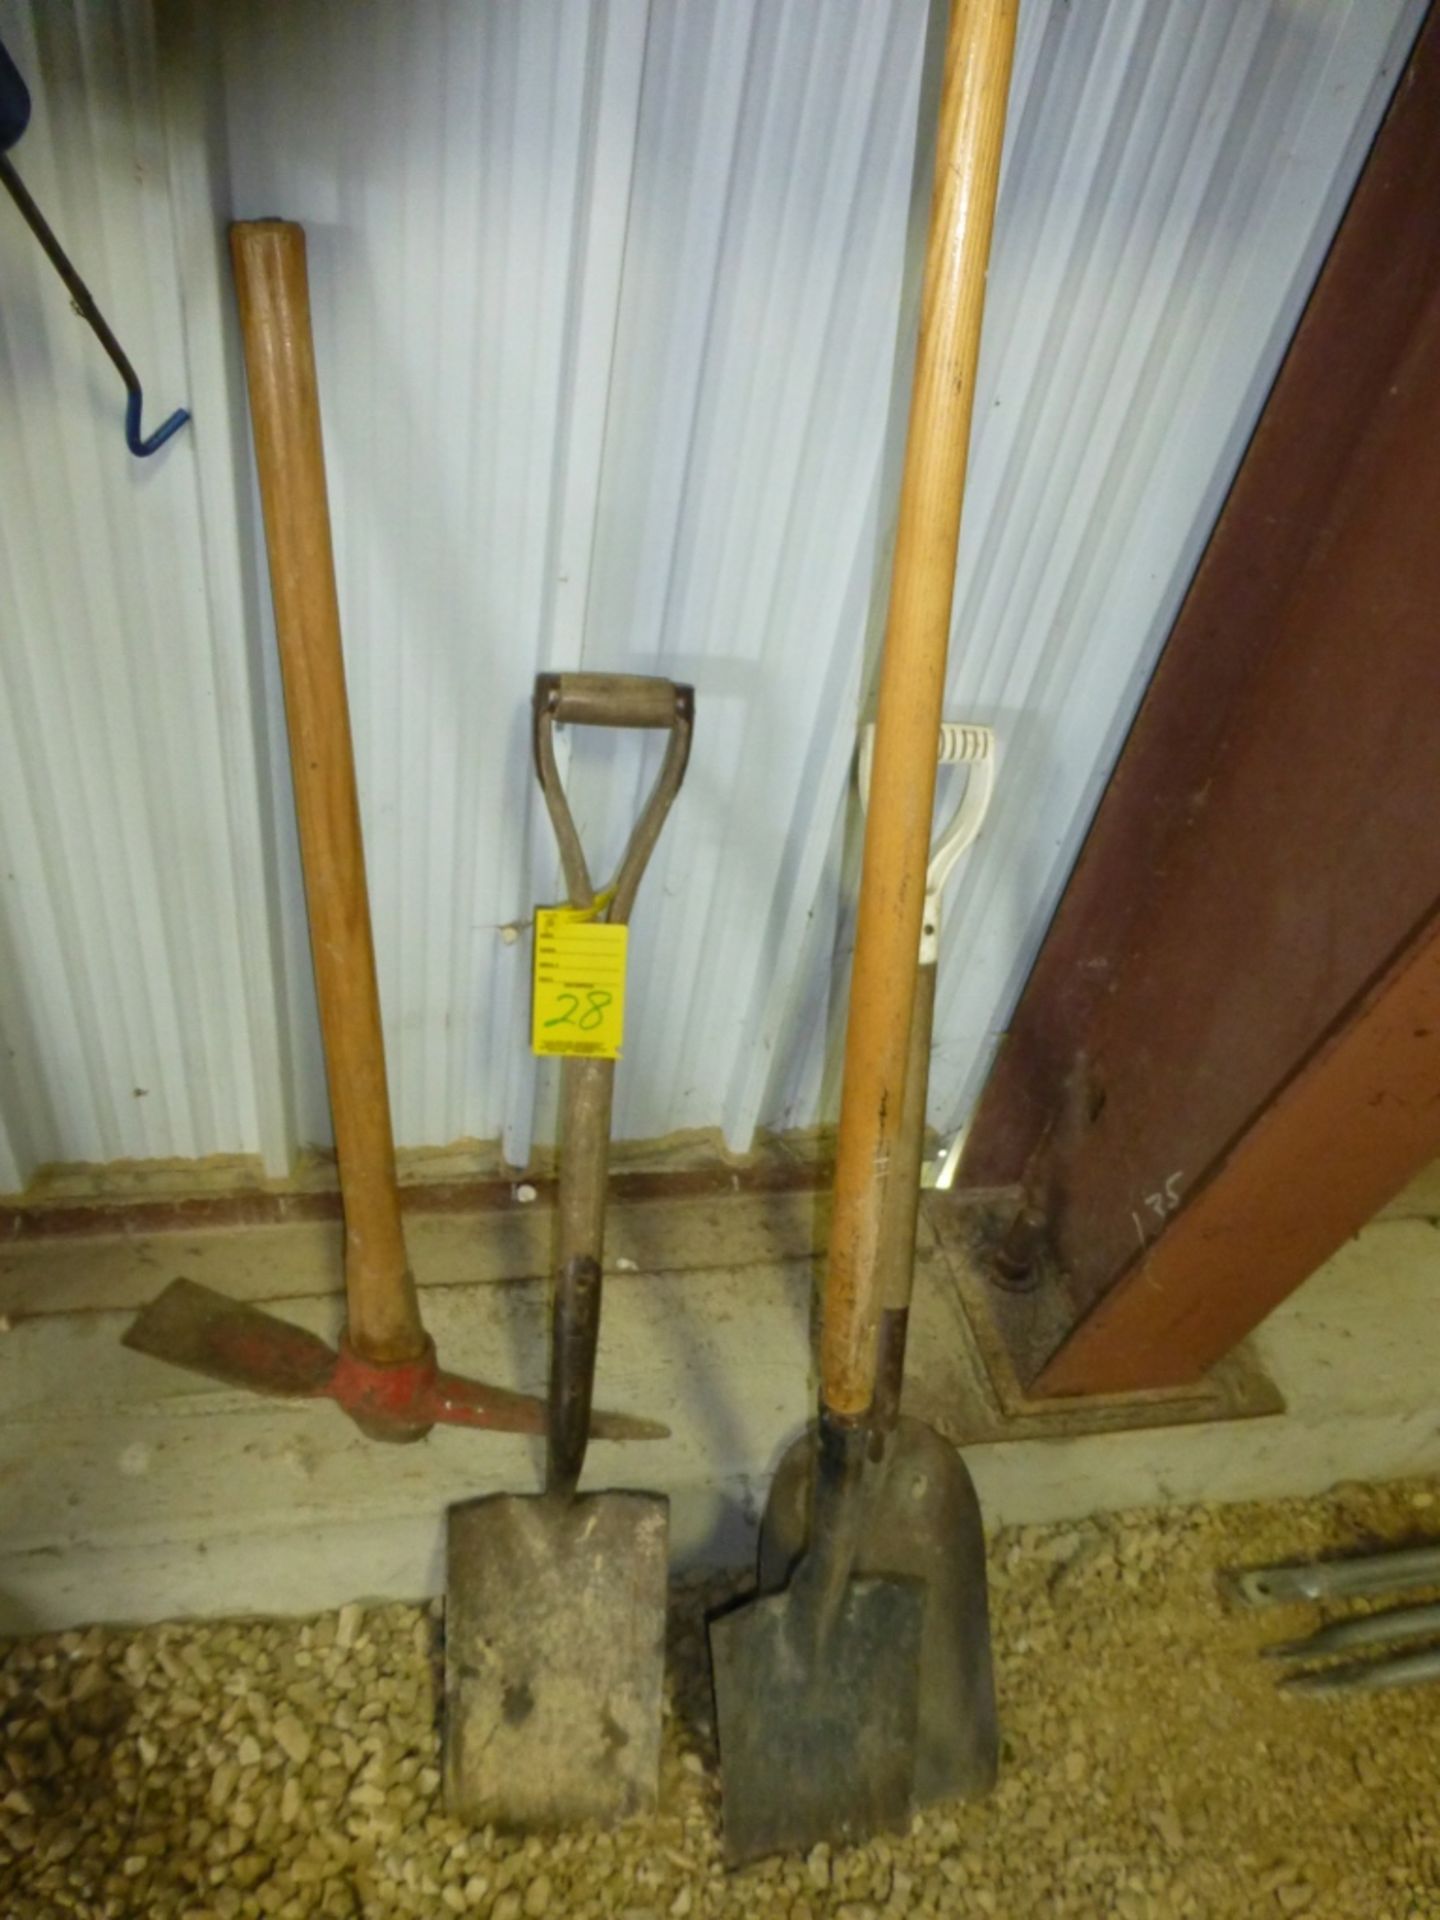 3 shovels and pick axe